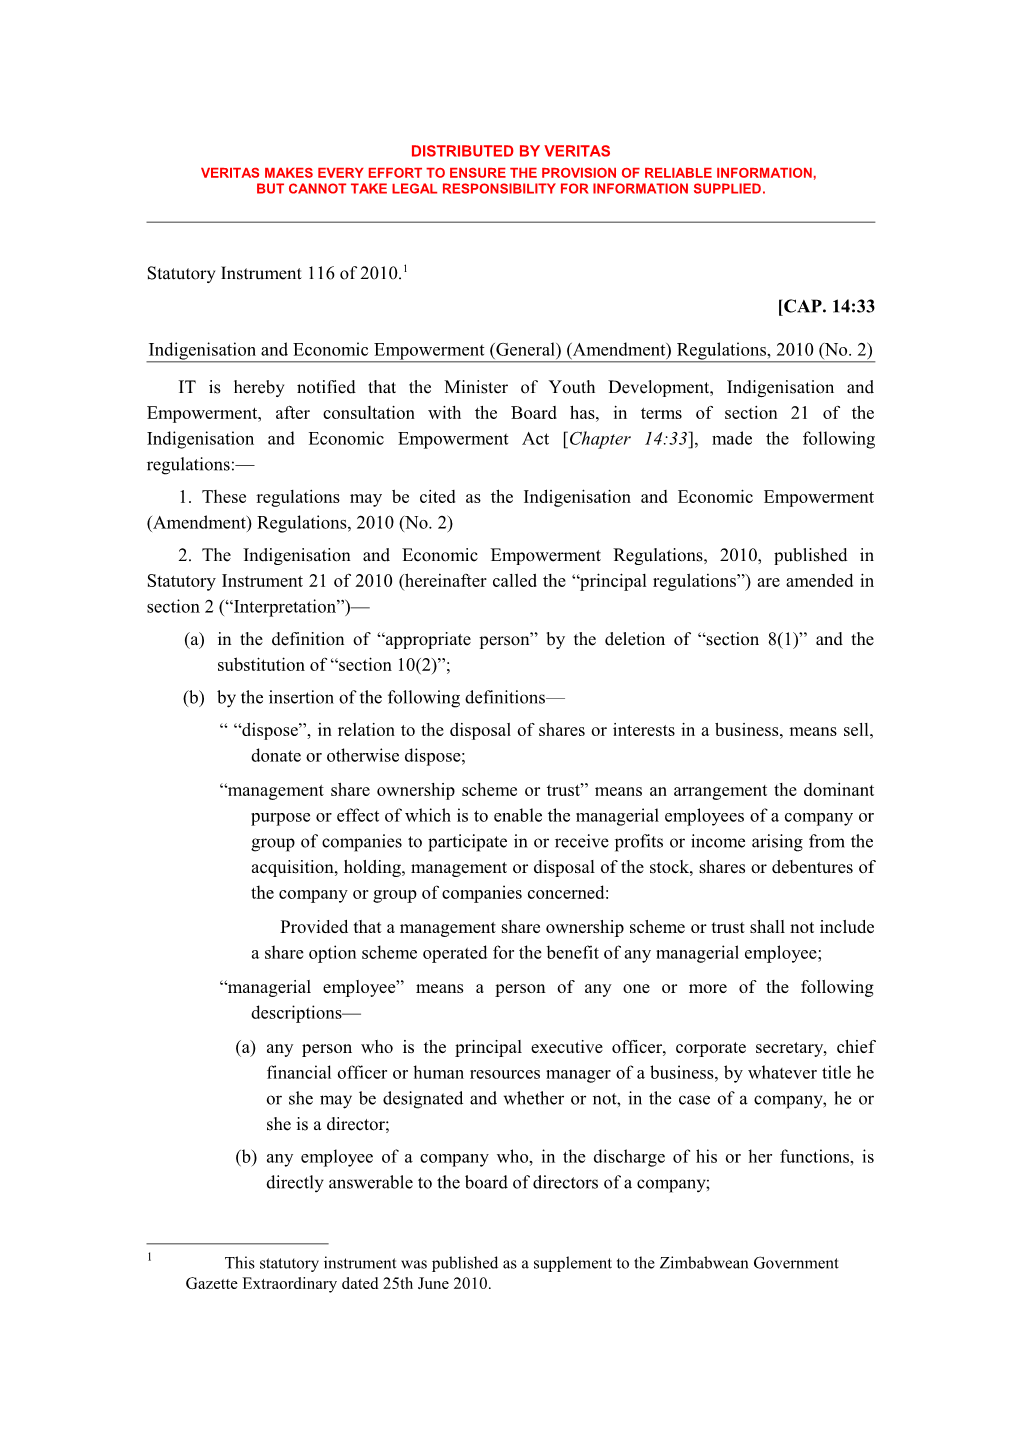 SI 2010-116 - Indigenisation Amendment Regulations No. 2